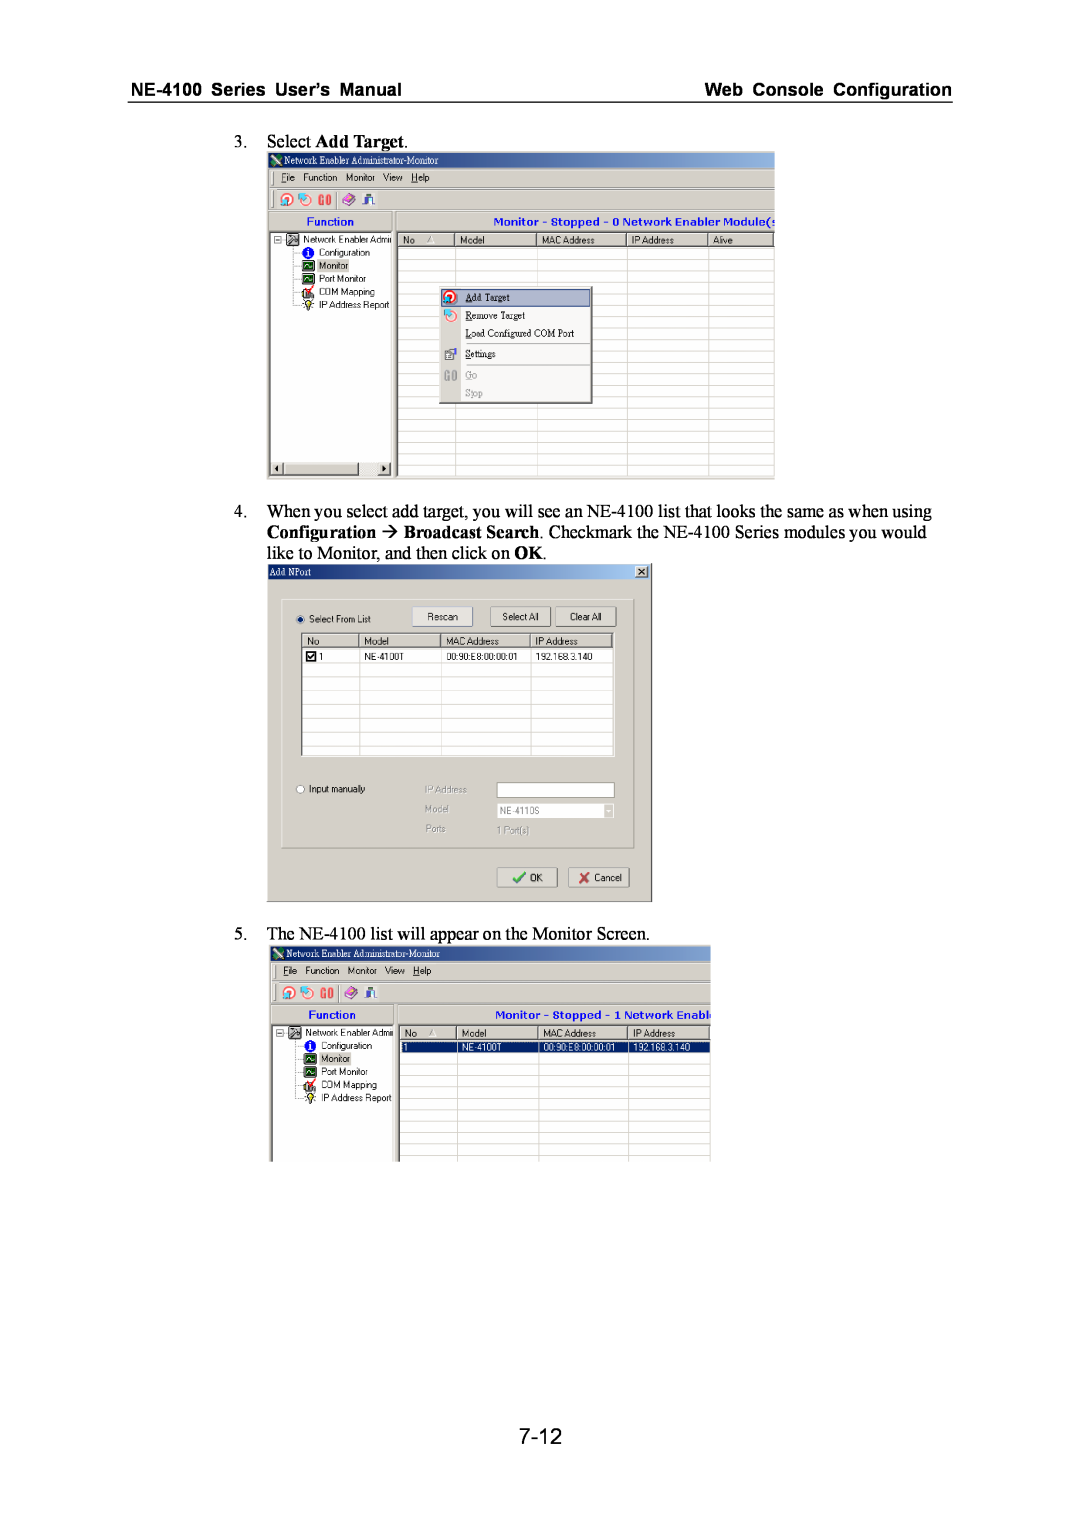 Moxa Technologies user manual 7-12, NE-4100 Series User’s Manual, Web Console Configuration, Select Add Target 